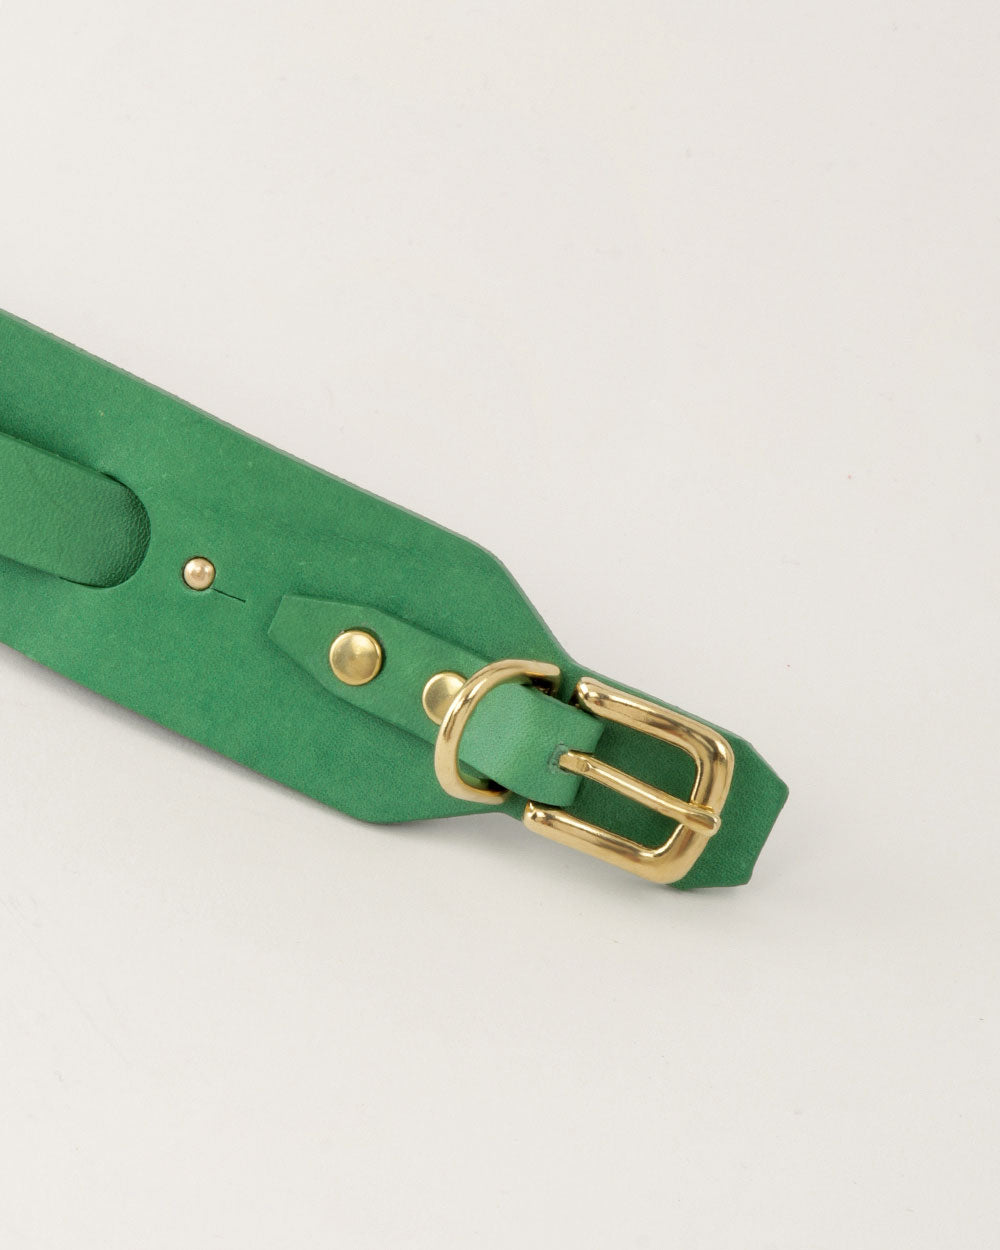 Collar galgo italiano · Whippet · cuero verde · Indómito